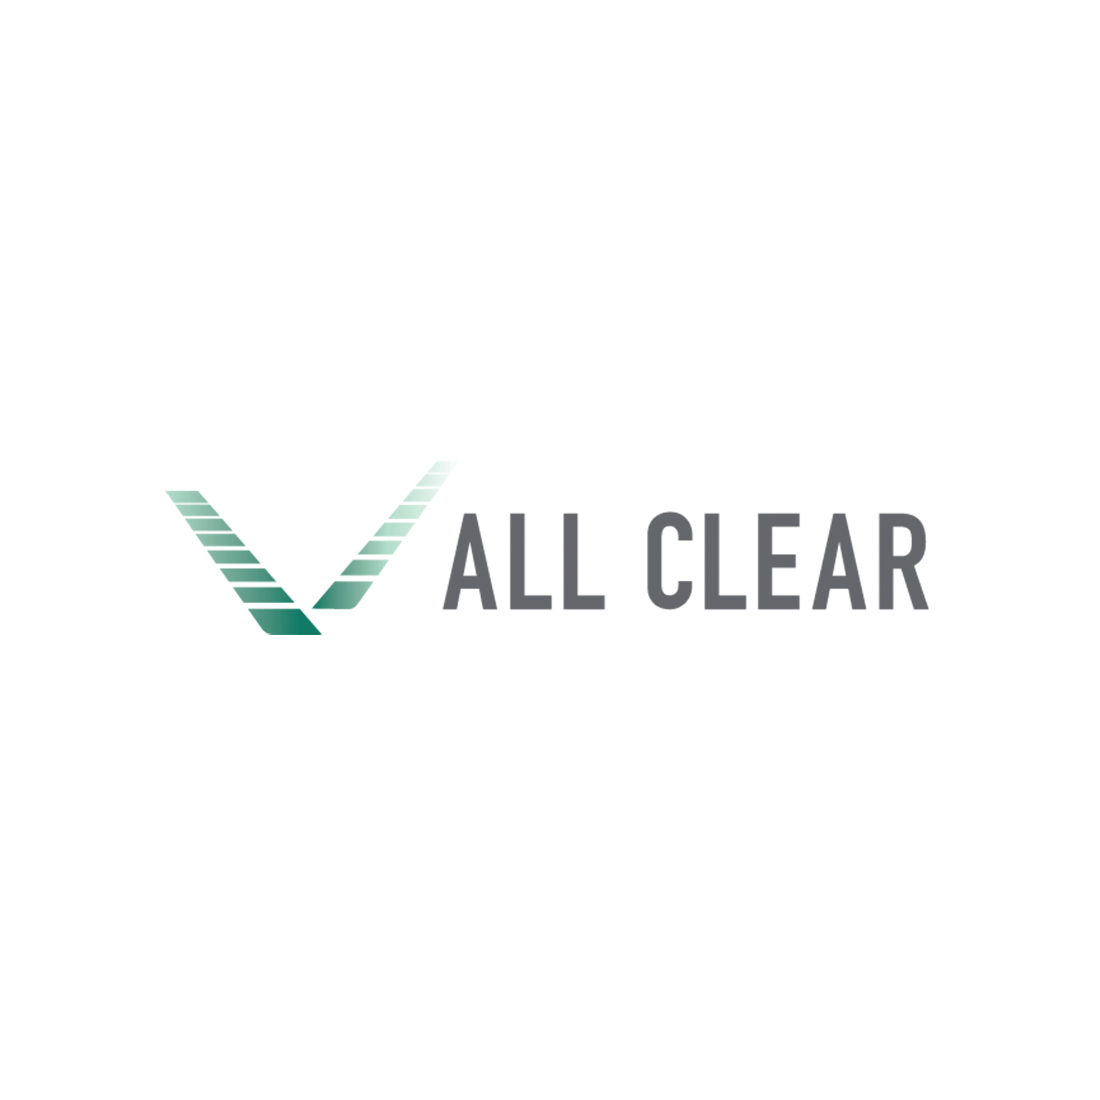 AllClear Aerospace & Defense